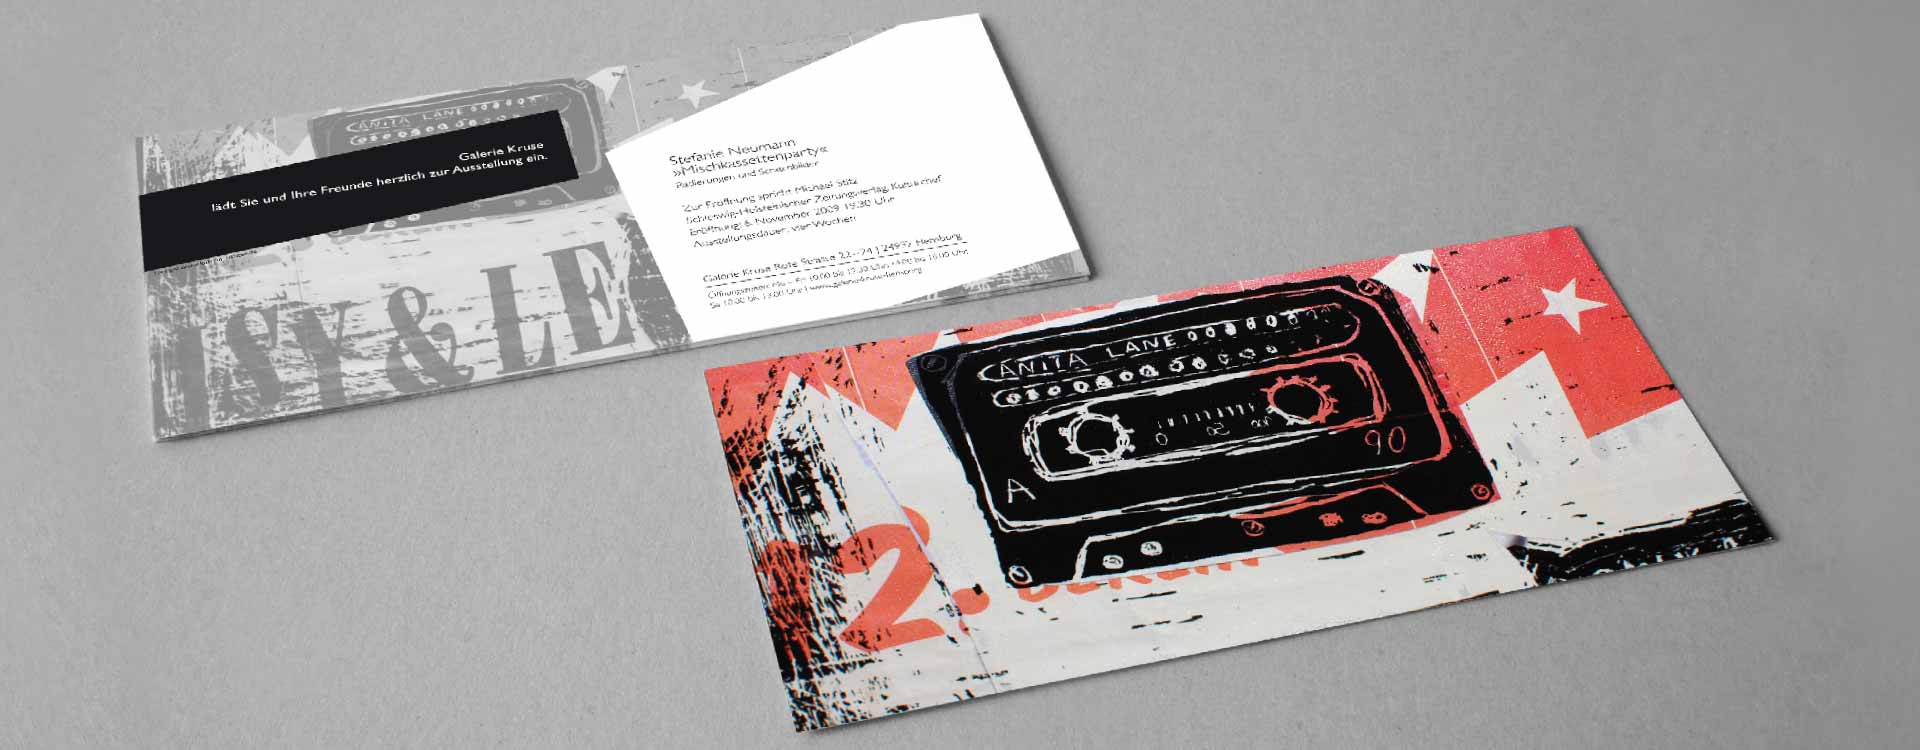 Invitation card for the solo exhibition of Stefanie Neumann in the Galerie Kruse, Flensburg; Design: Kattrin Richter | Graphic Design Studio